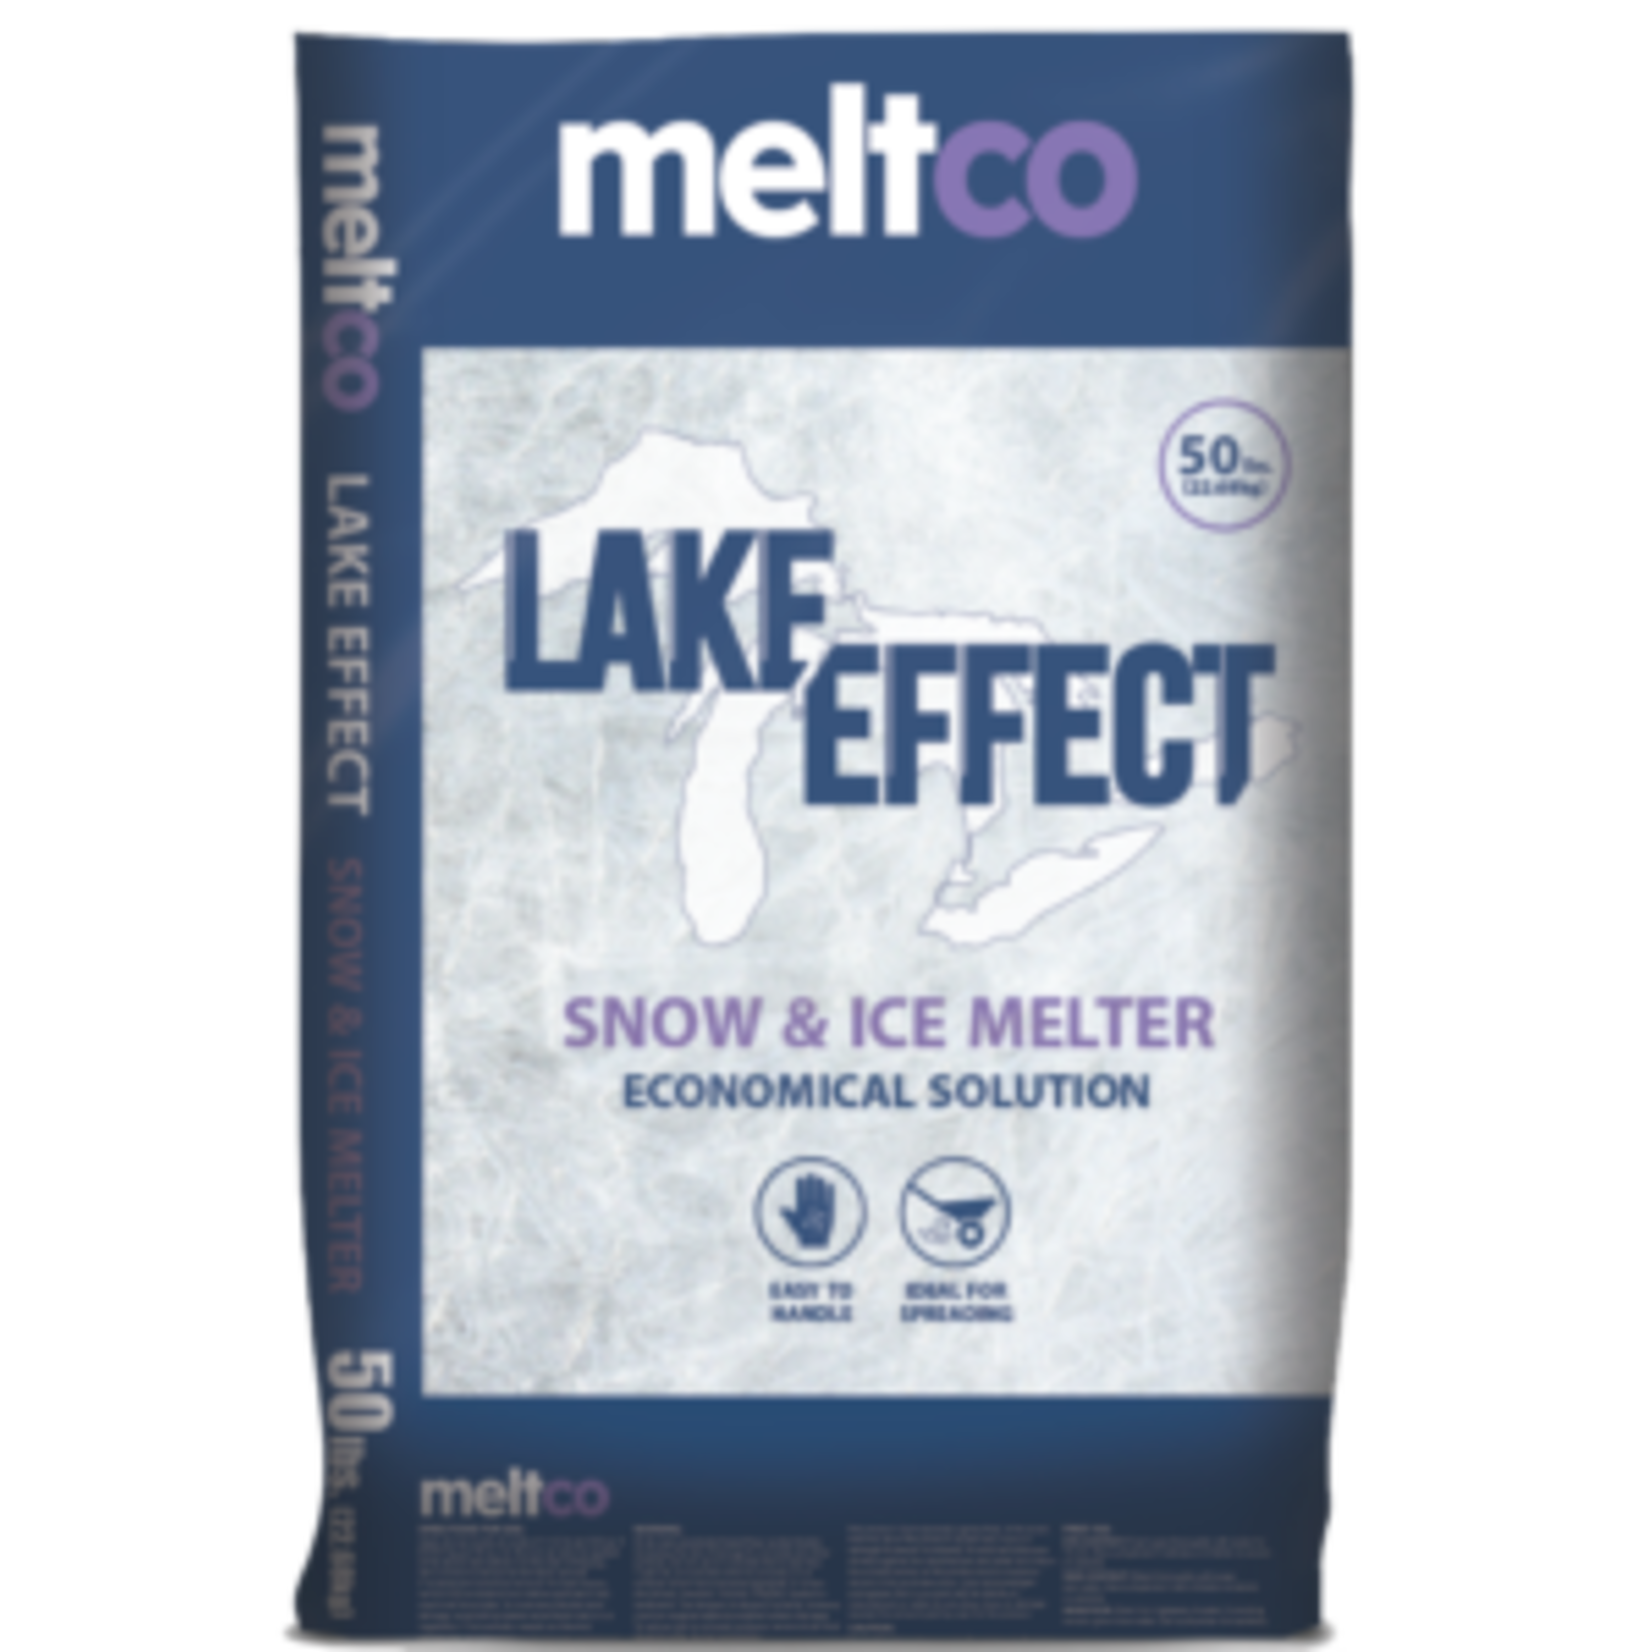 Meltco (1) 50 lbs. bag of Meltco Lake Effect Rock Salt